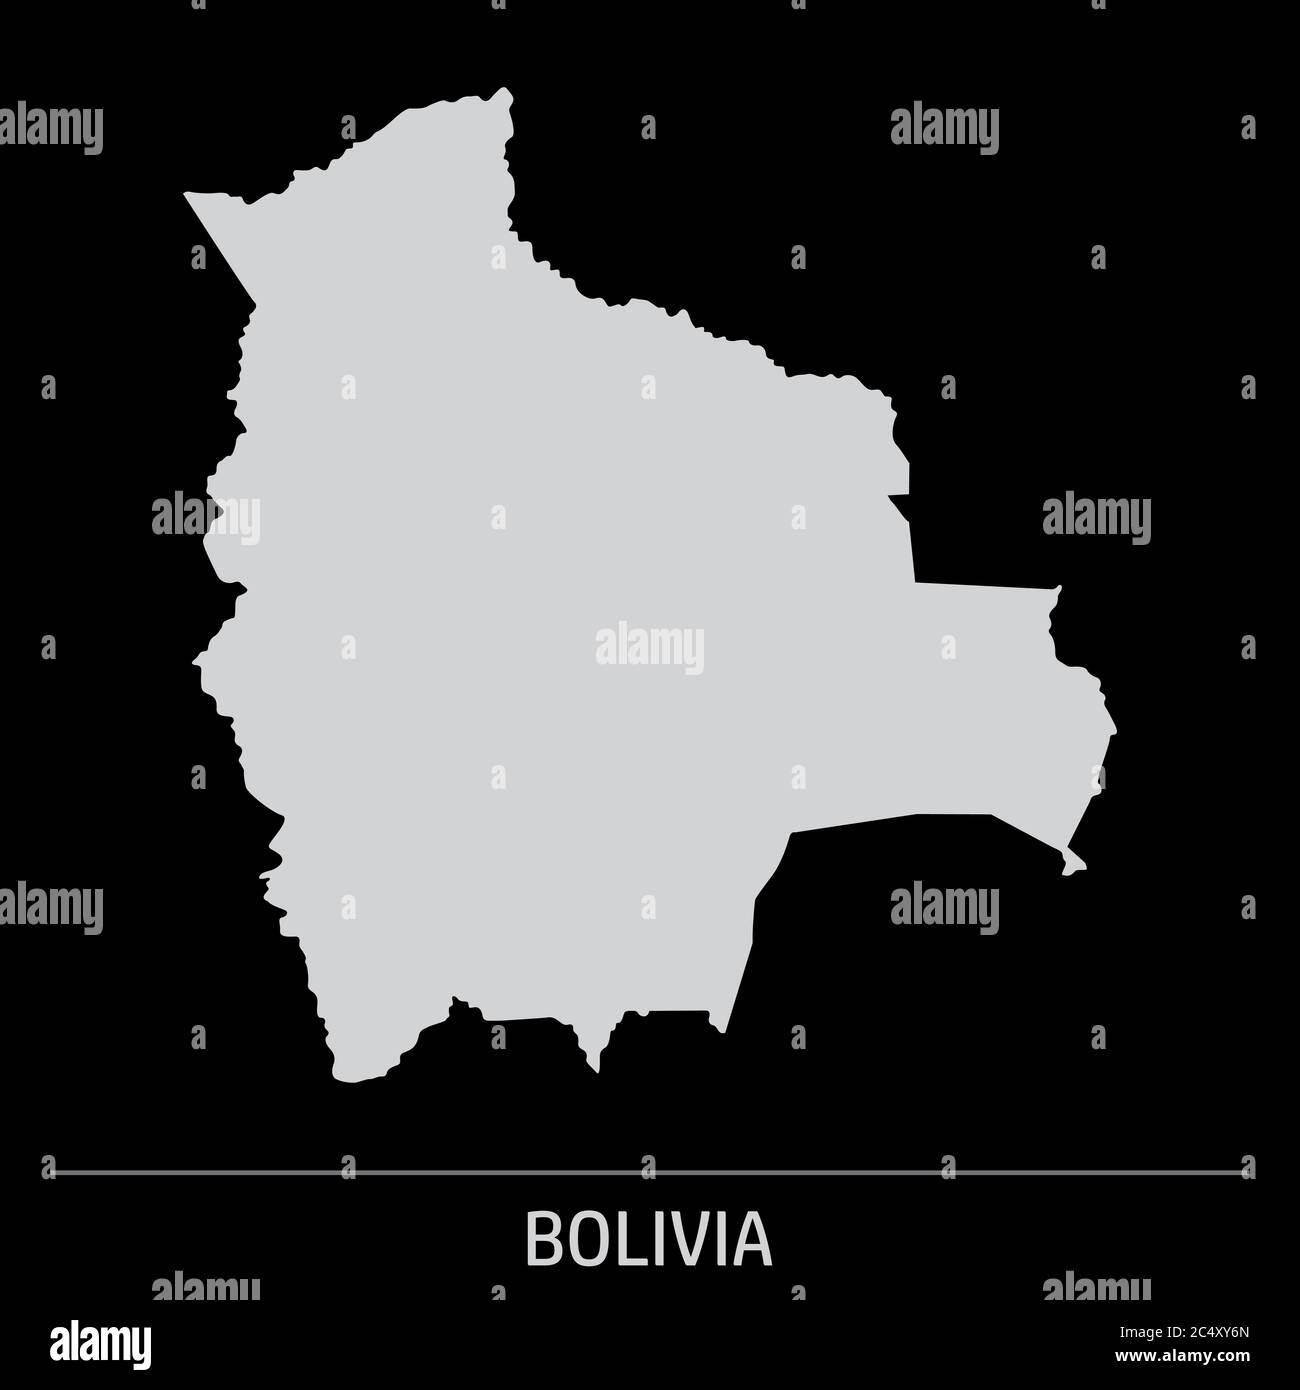 Bolivia map icon Stock Vector